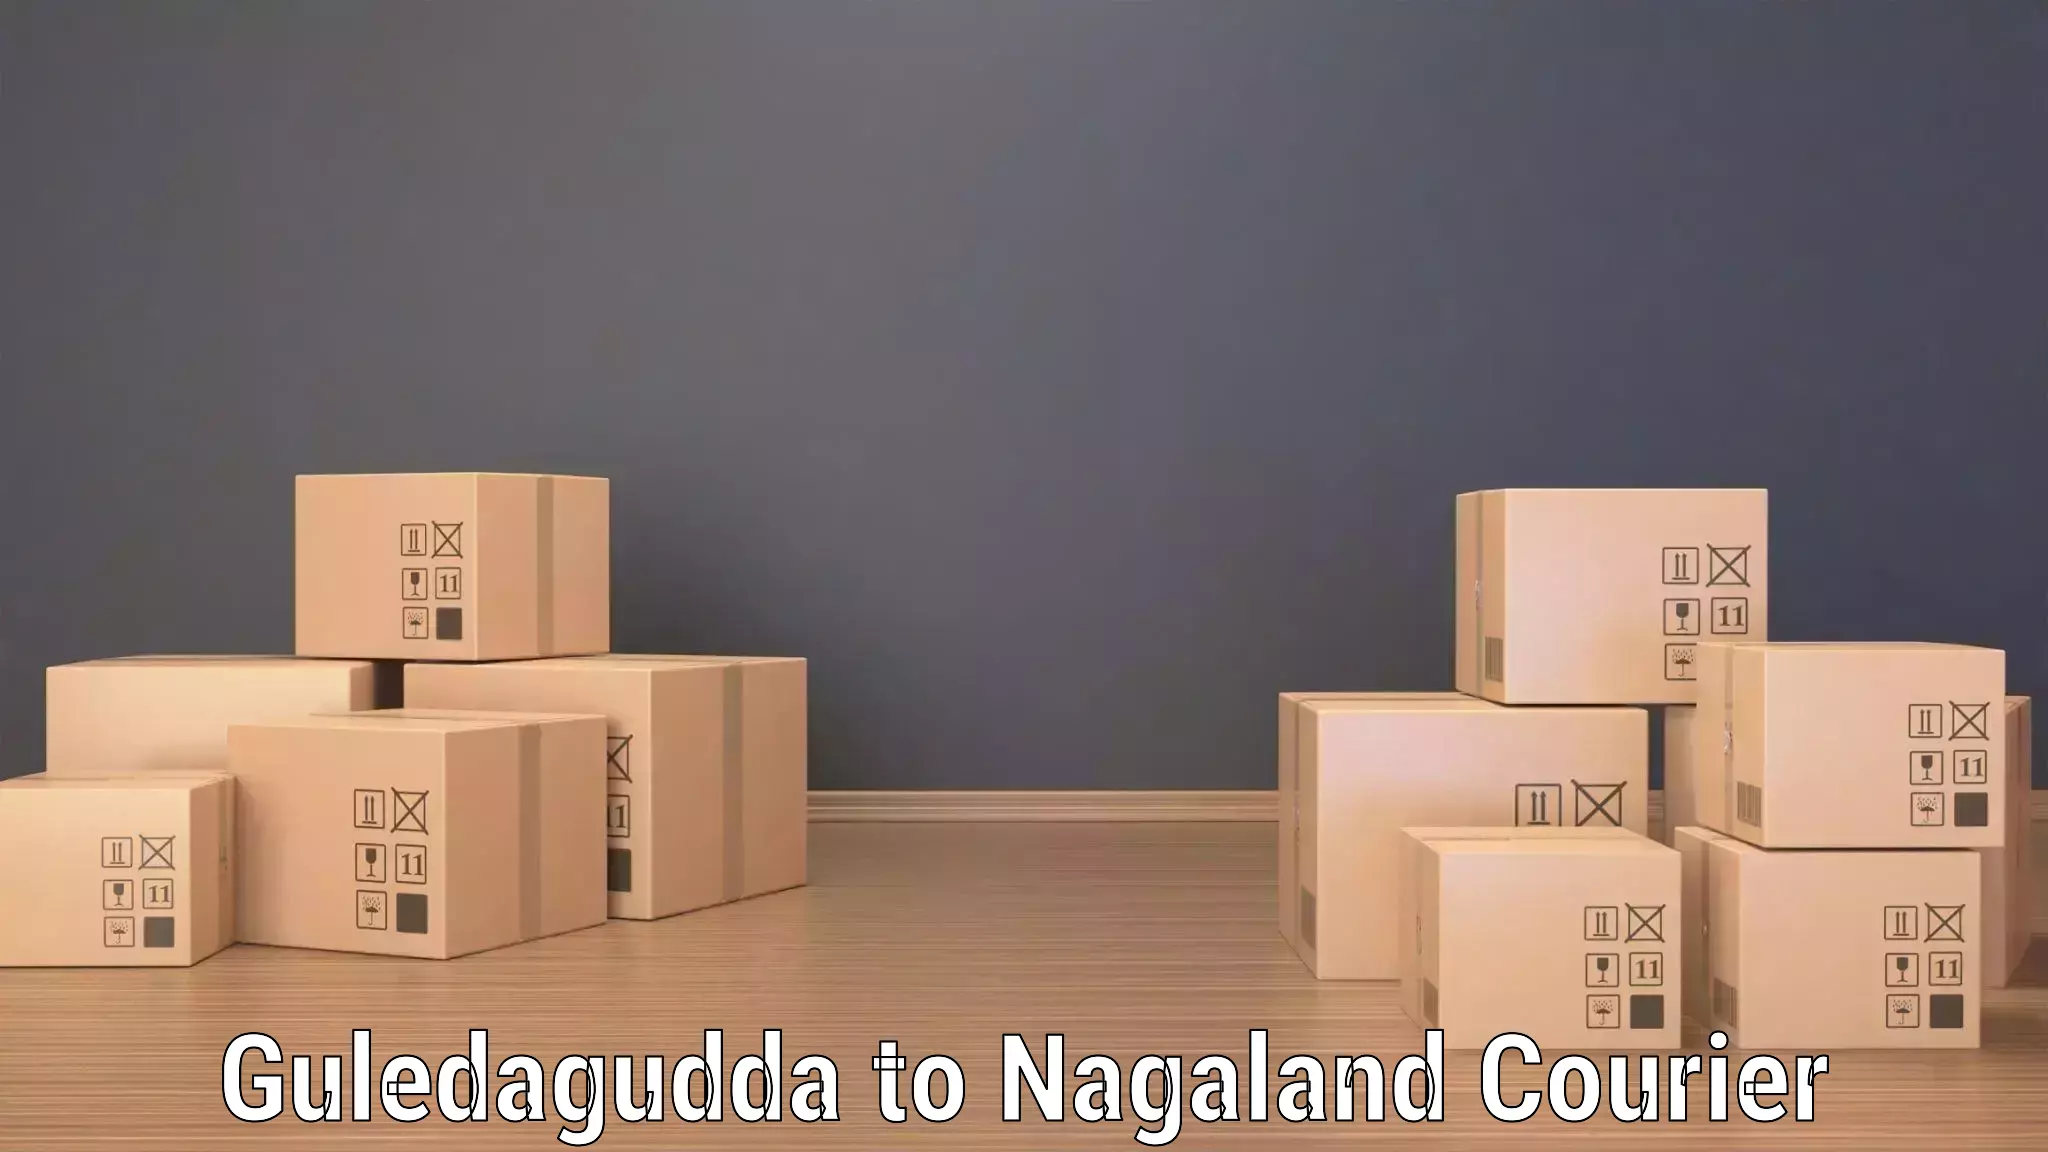 End-to-end delivery Guledagudda to Nagaland